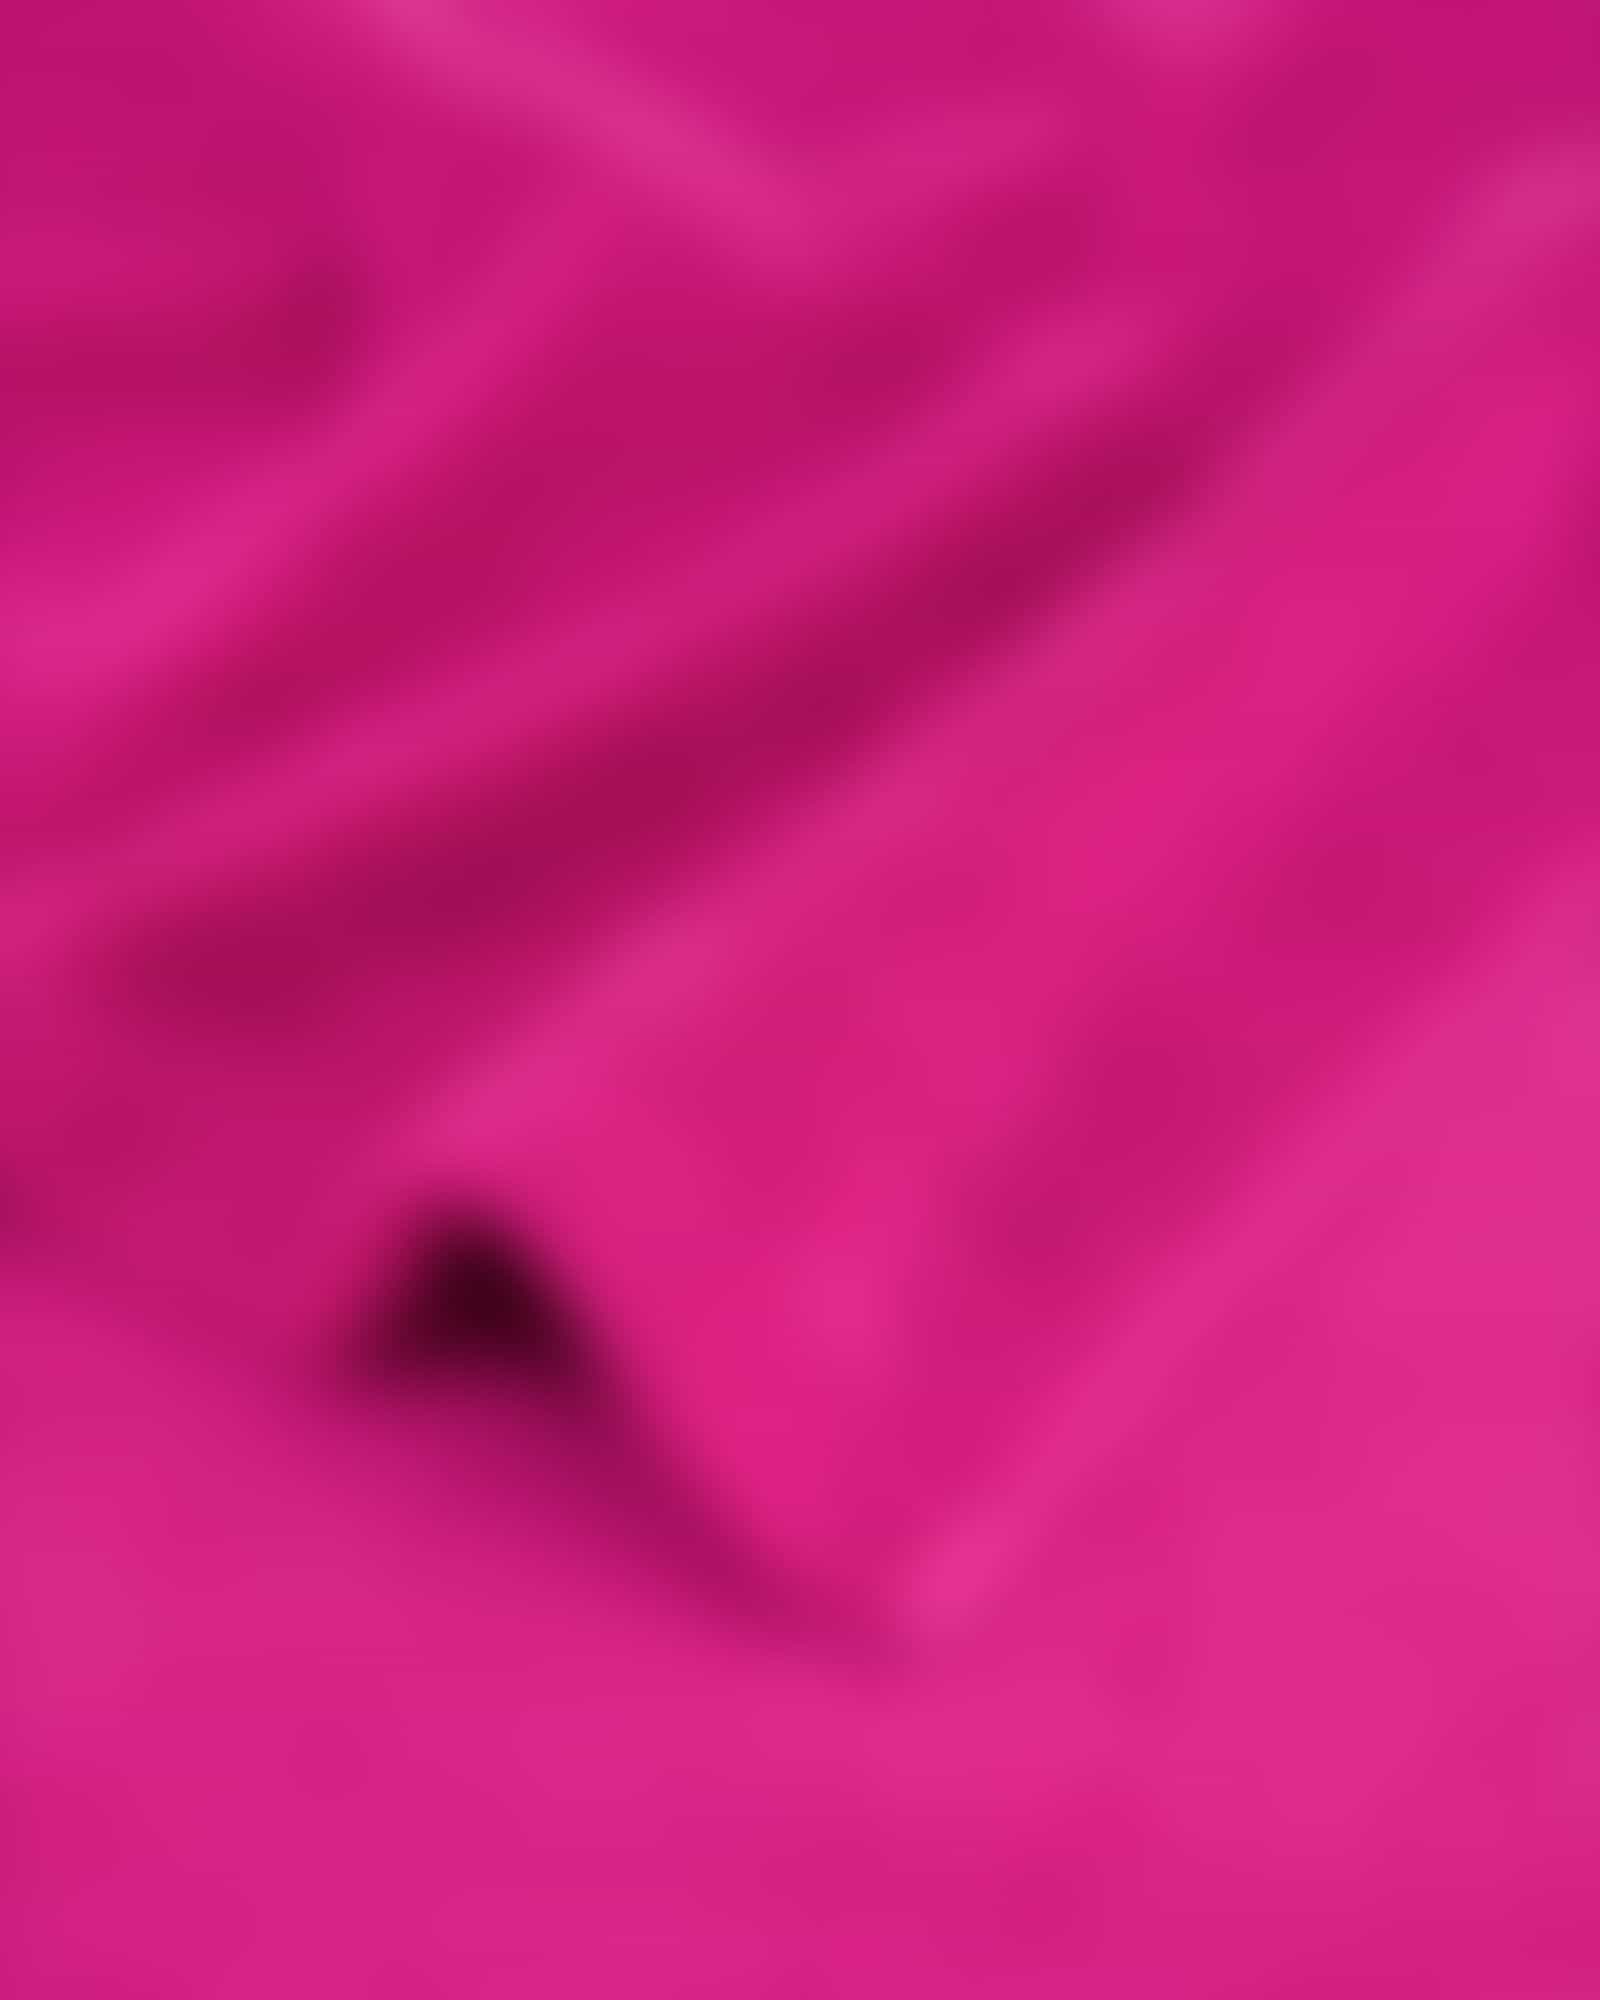 Cawö Handtücher Life Style Uni 7007 - Farbe: pink - 247 - Seiflappen 30x30 cm